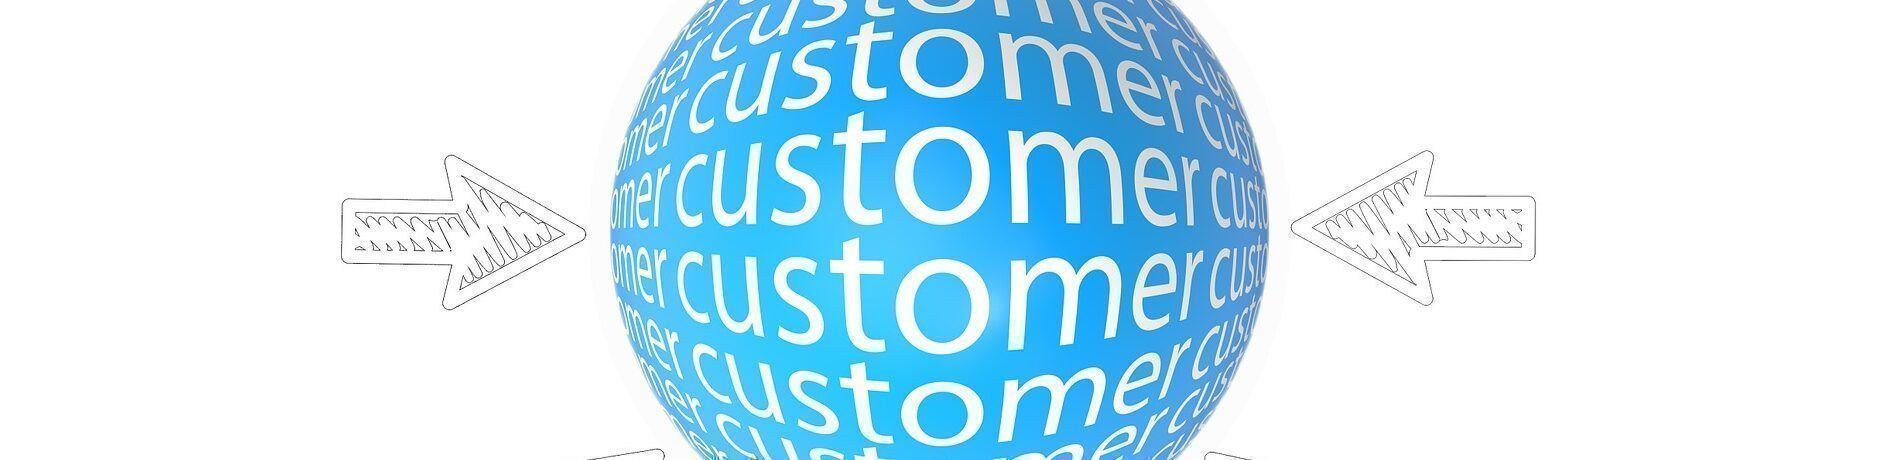 Apply basic skills of customer service